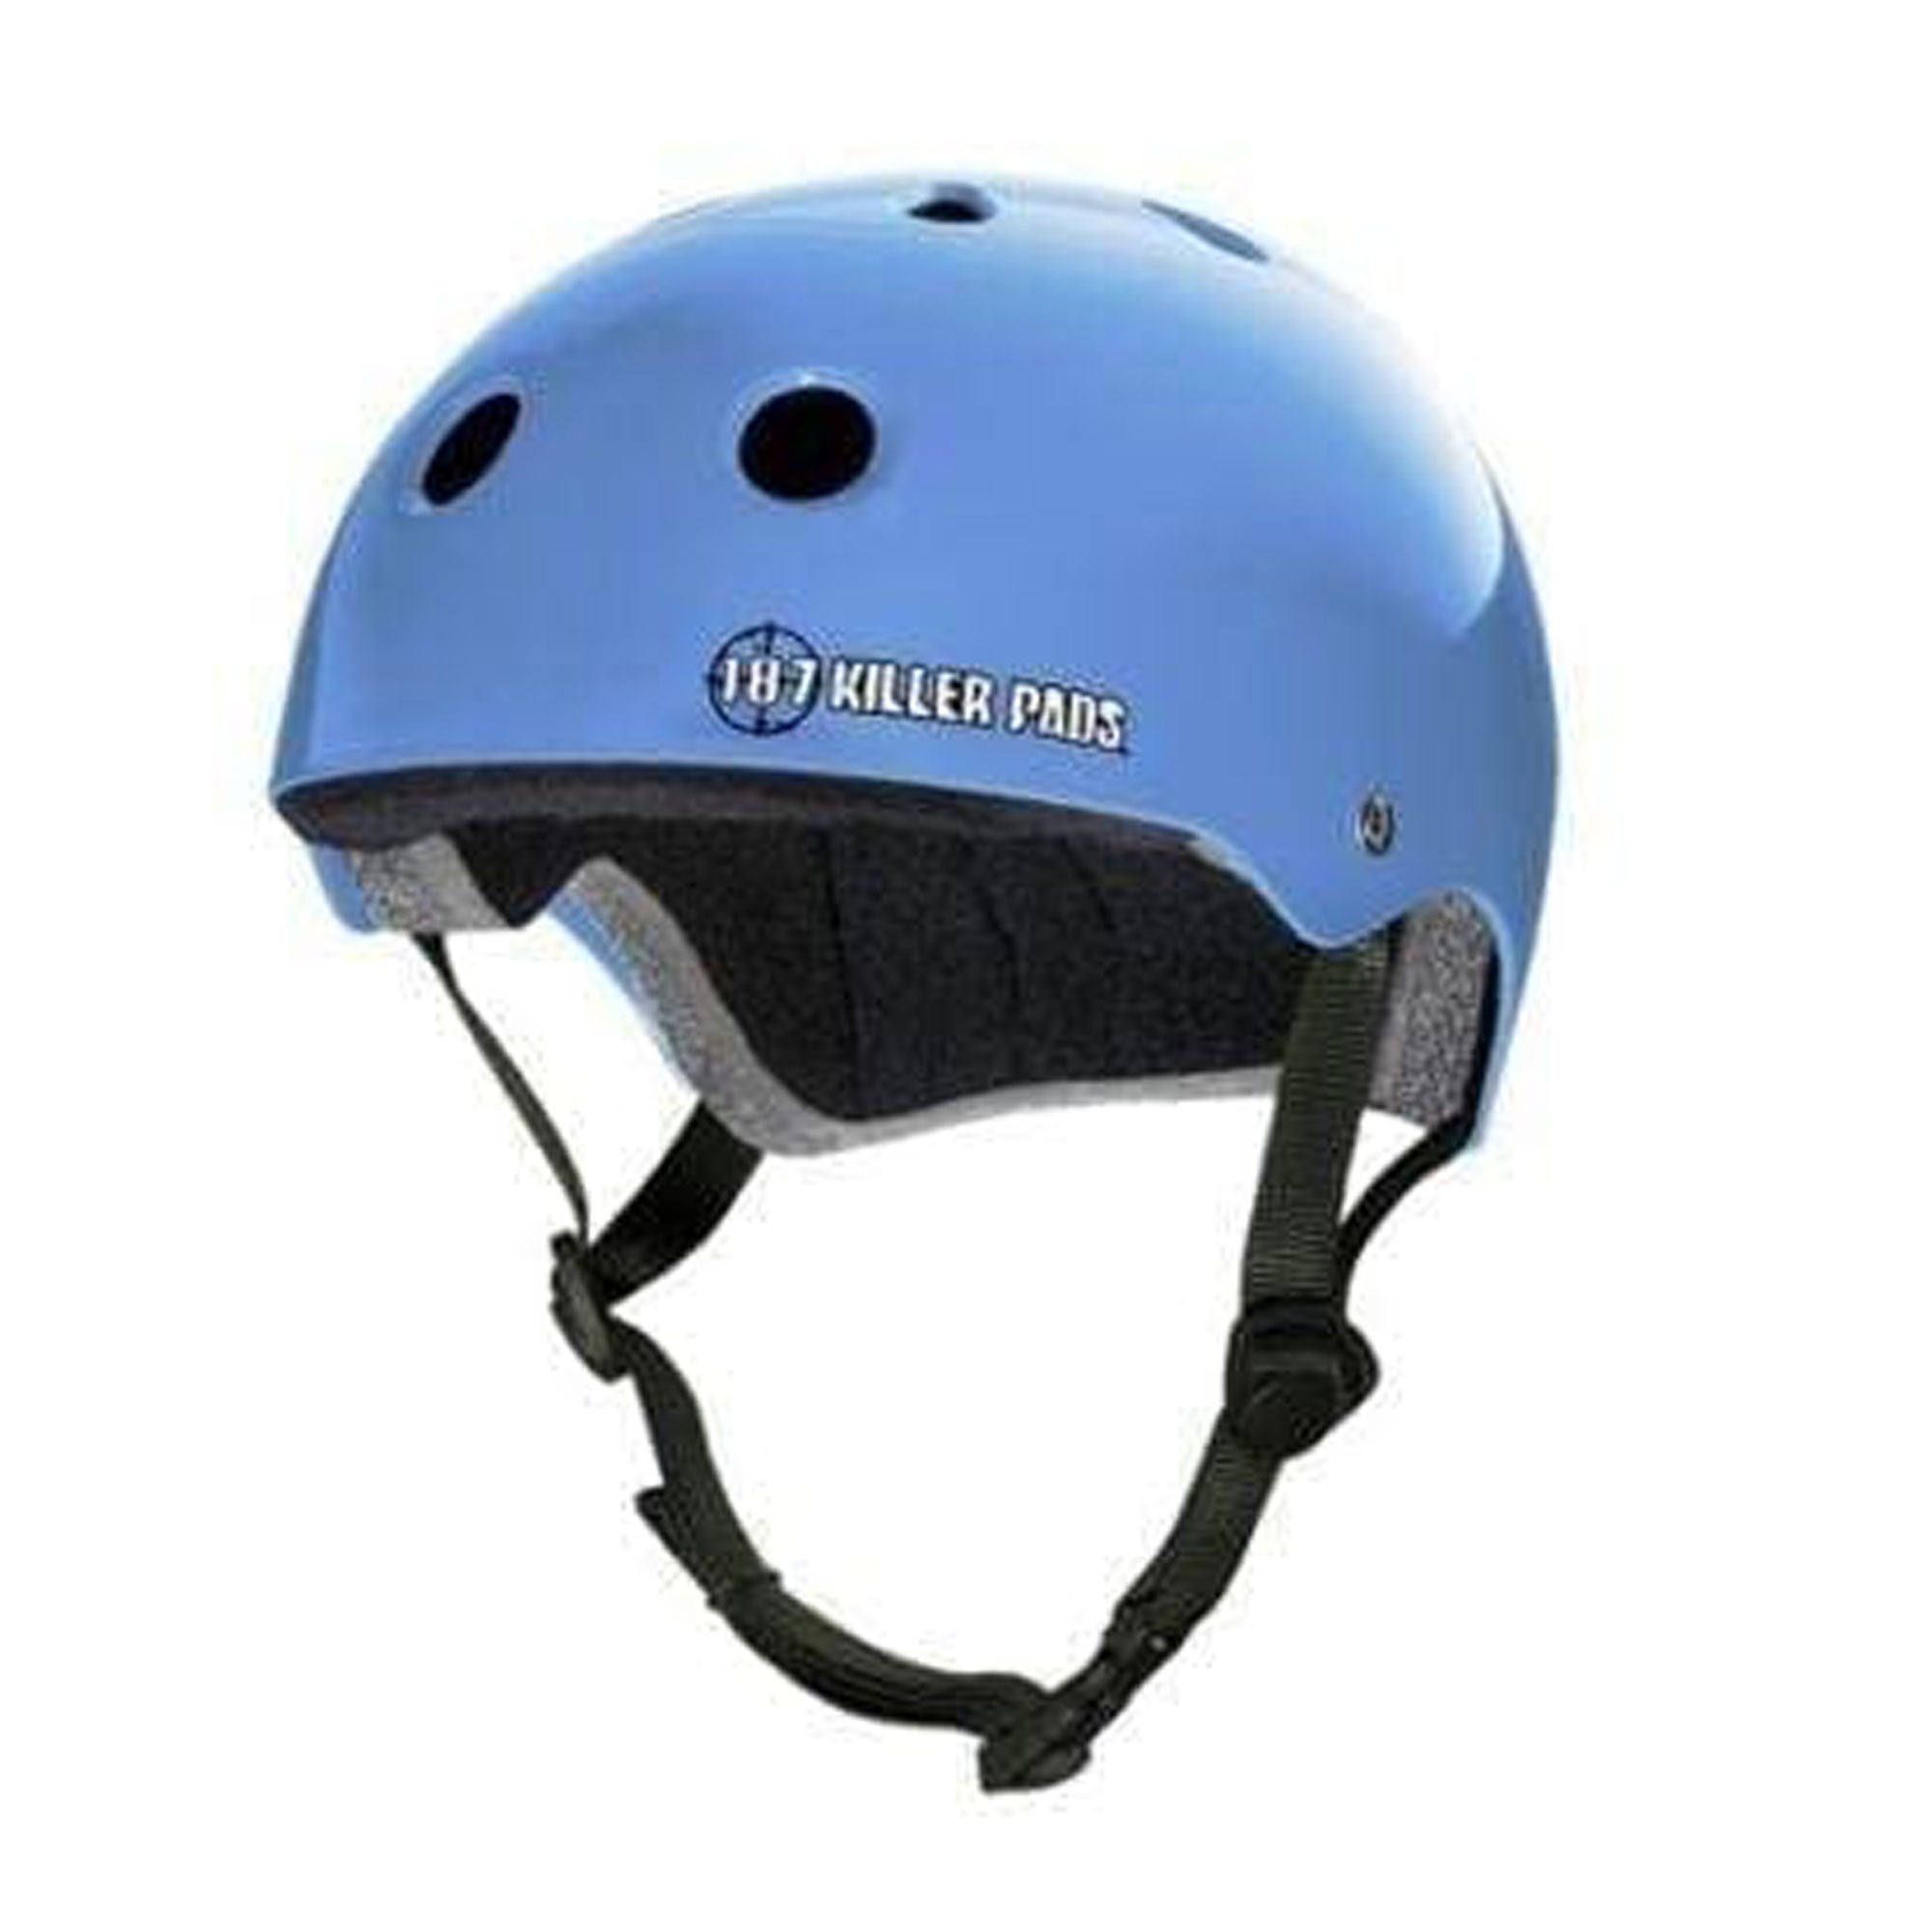 187 Killer Pads Pro Skate Helmet with Sweatsaver Liner, Charcoal Matte,  Large